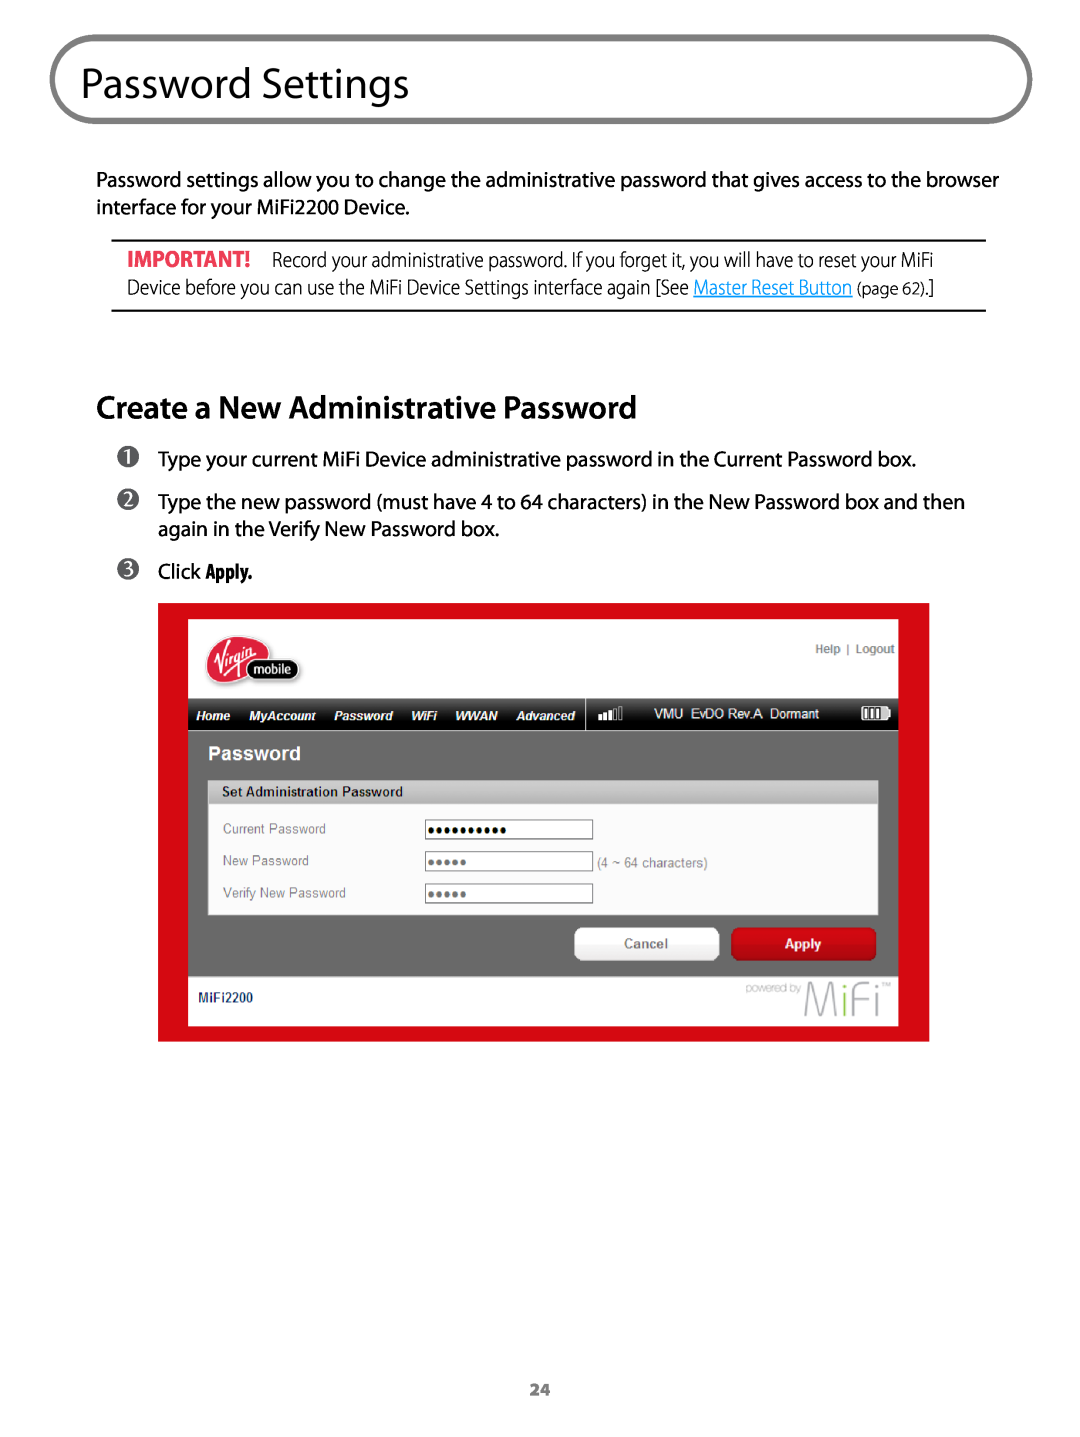 Virgin Mobile 2200 manual Password Settings, Create a New Administrative Password 